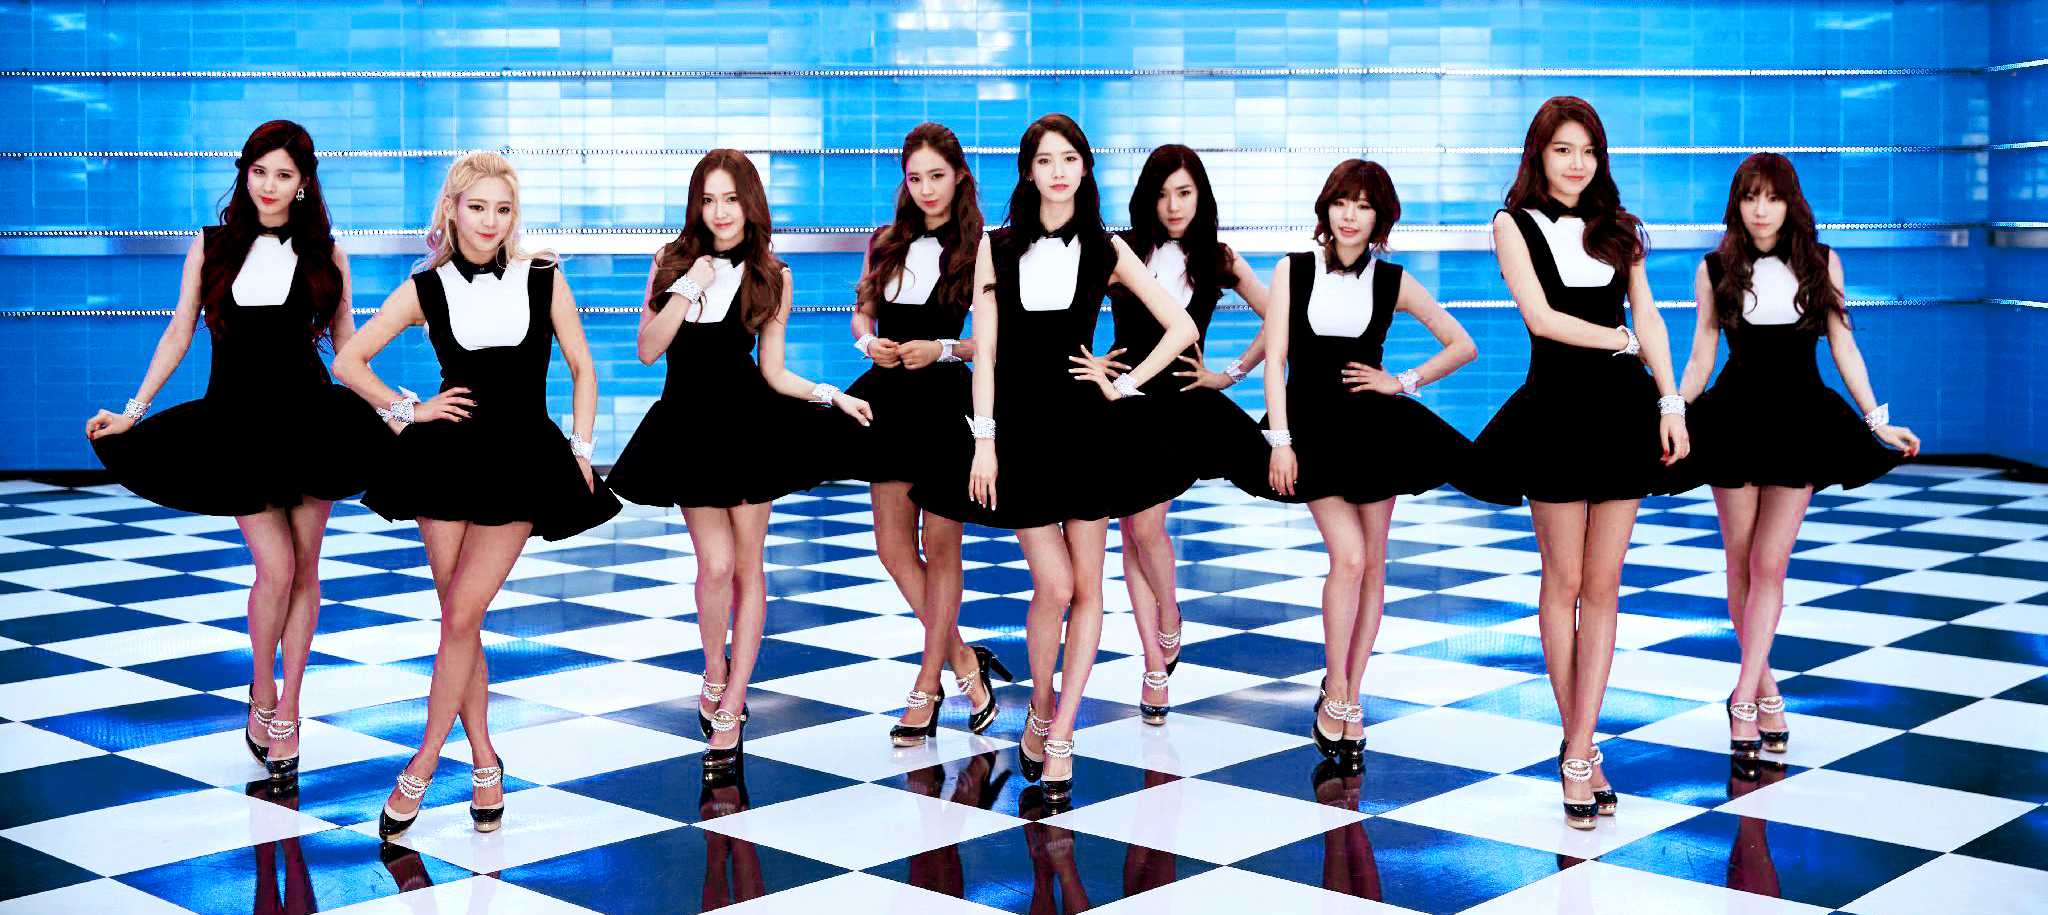 Girls-Generation-SNSD-So-Nyeo-Shi-Dae-im